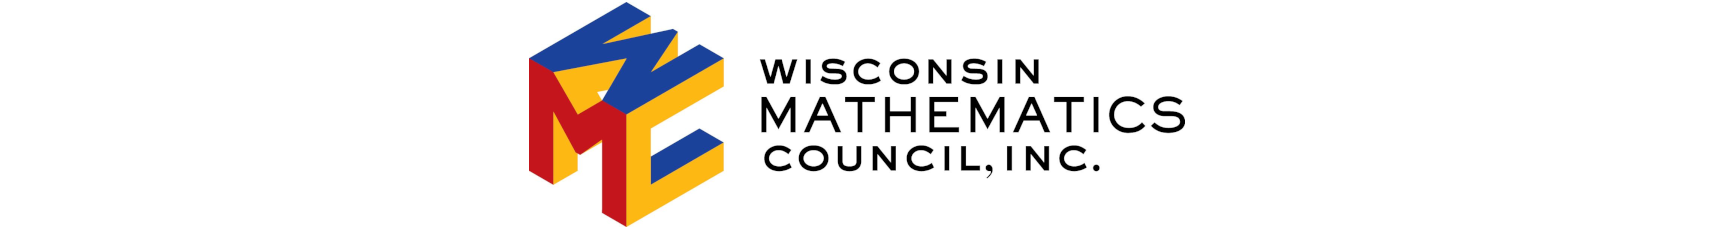 Wisconsin Mathematics Council